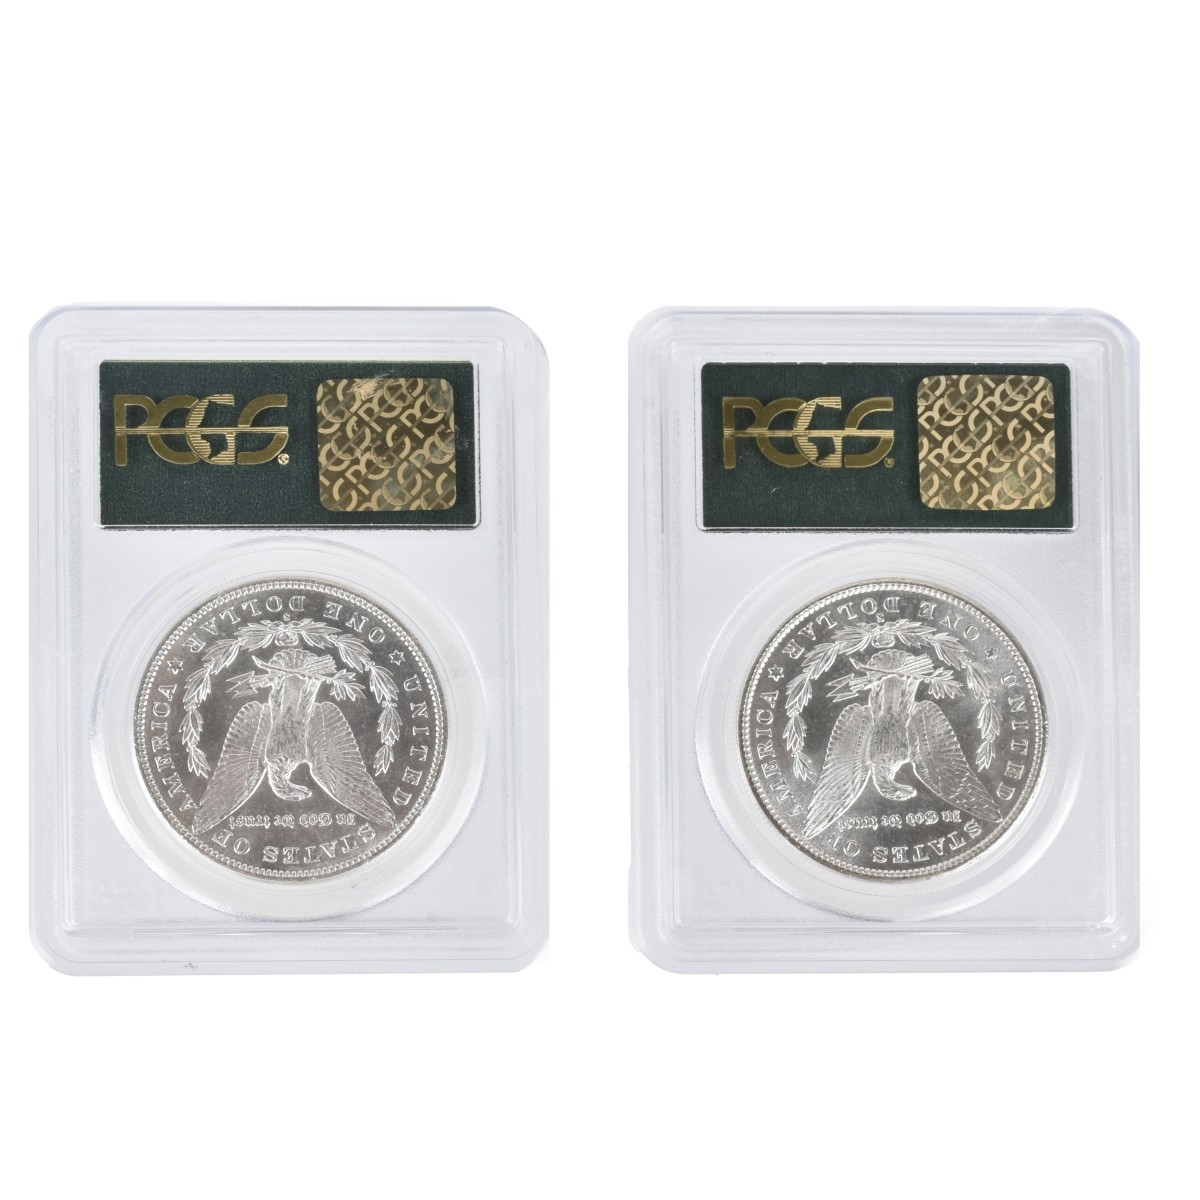 Two (2) Morgan Silver Dollars MS65 Slabbed